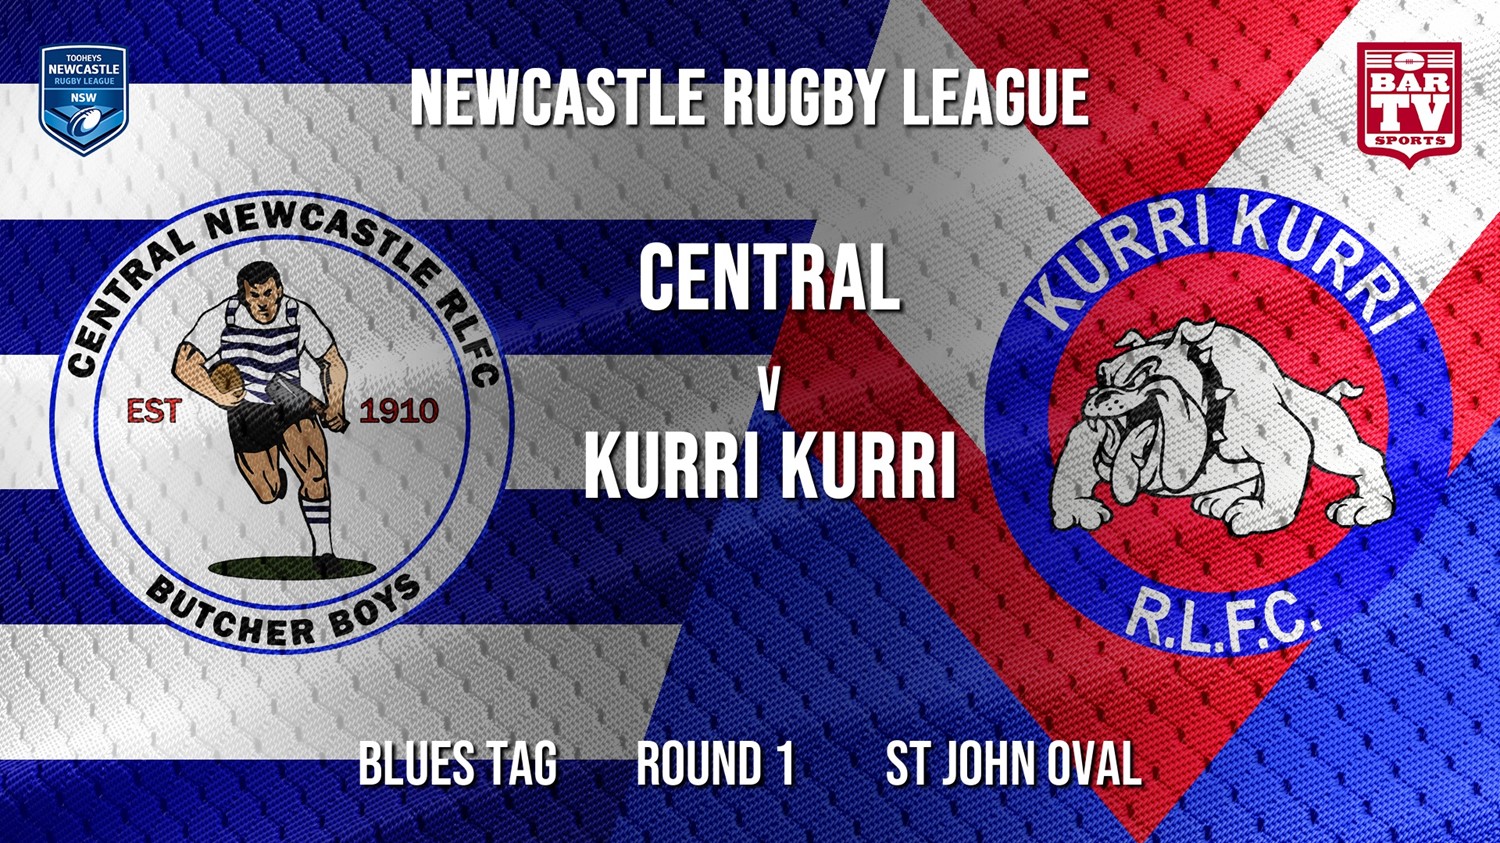 Newcastle Rugby League Round 1  - Blues Tag - Central Newcastle v Kurri Kurri Bulldogs Minigame Slate Image